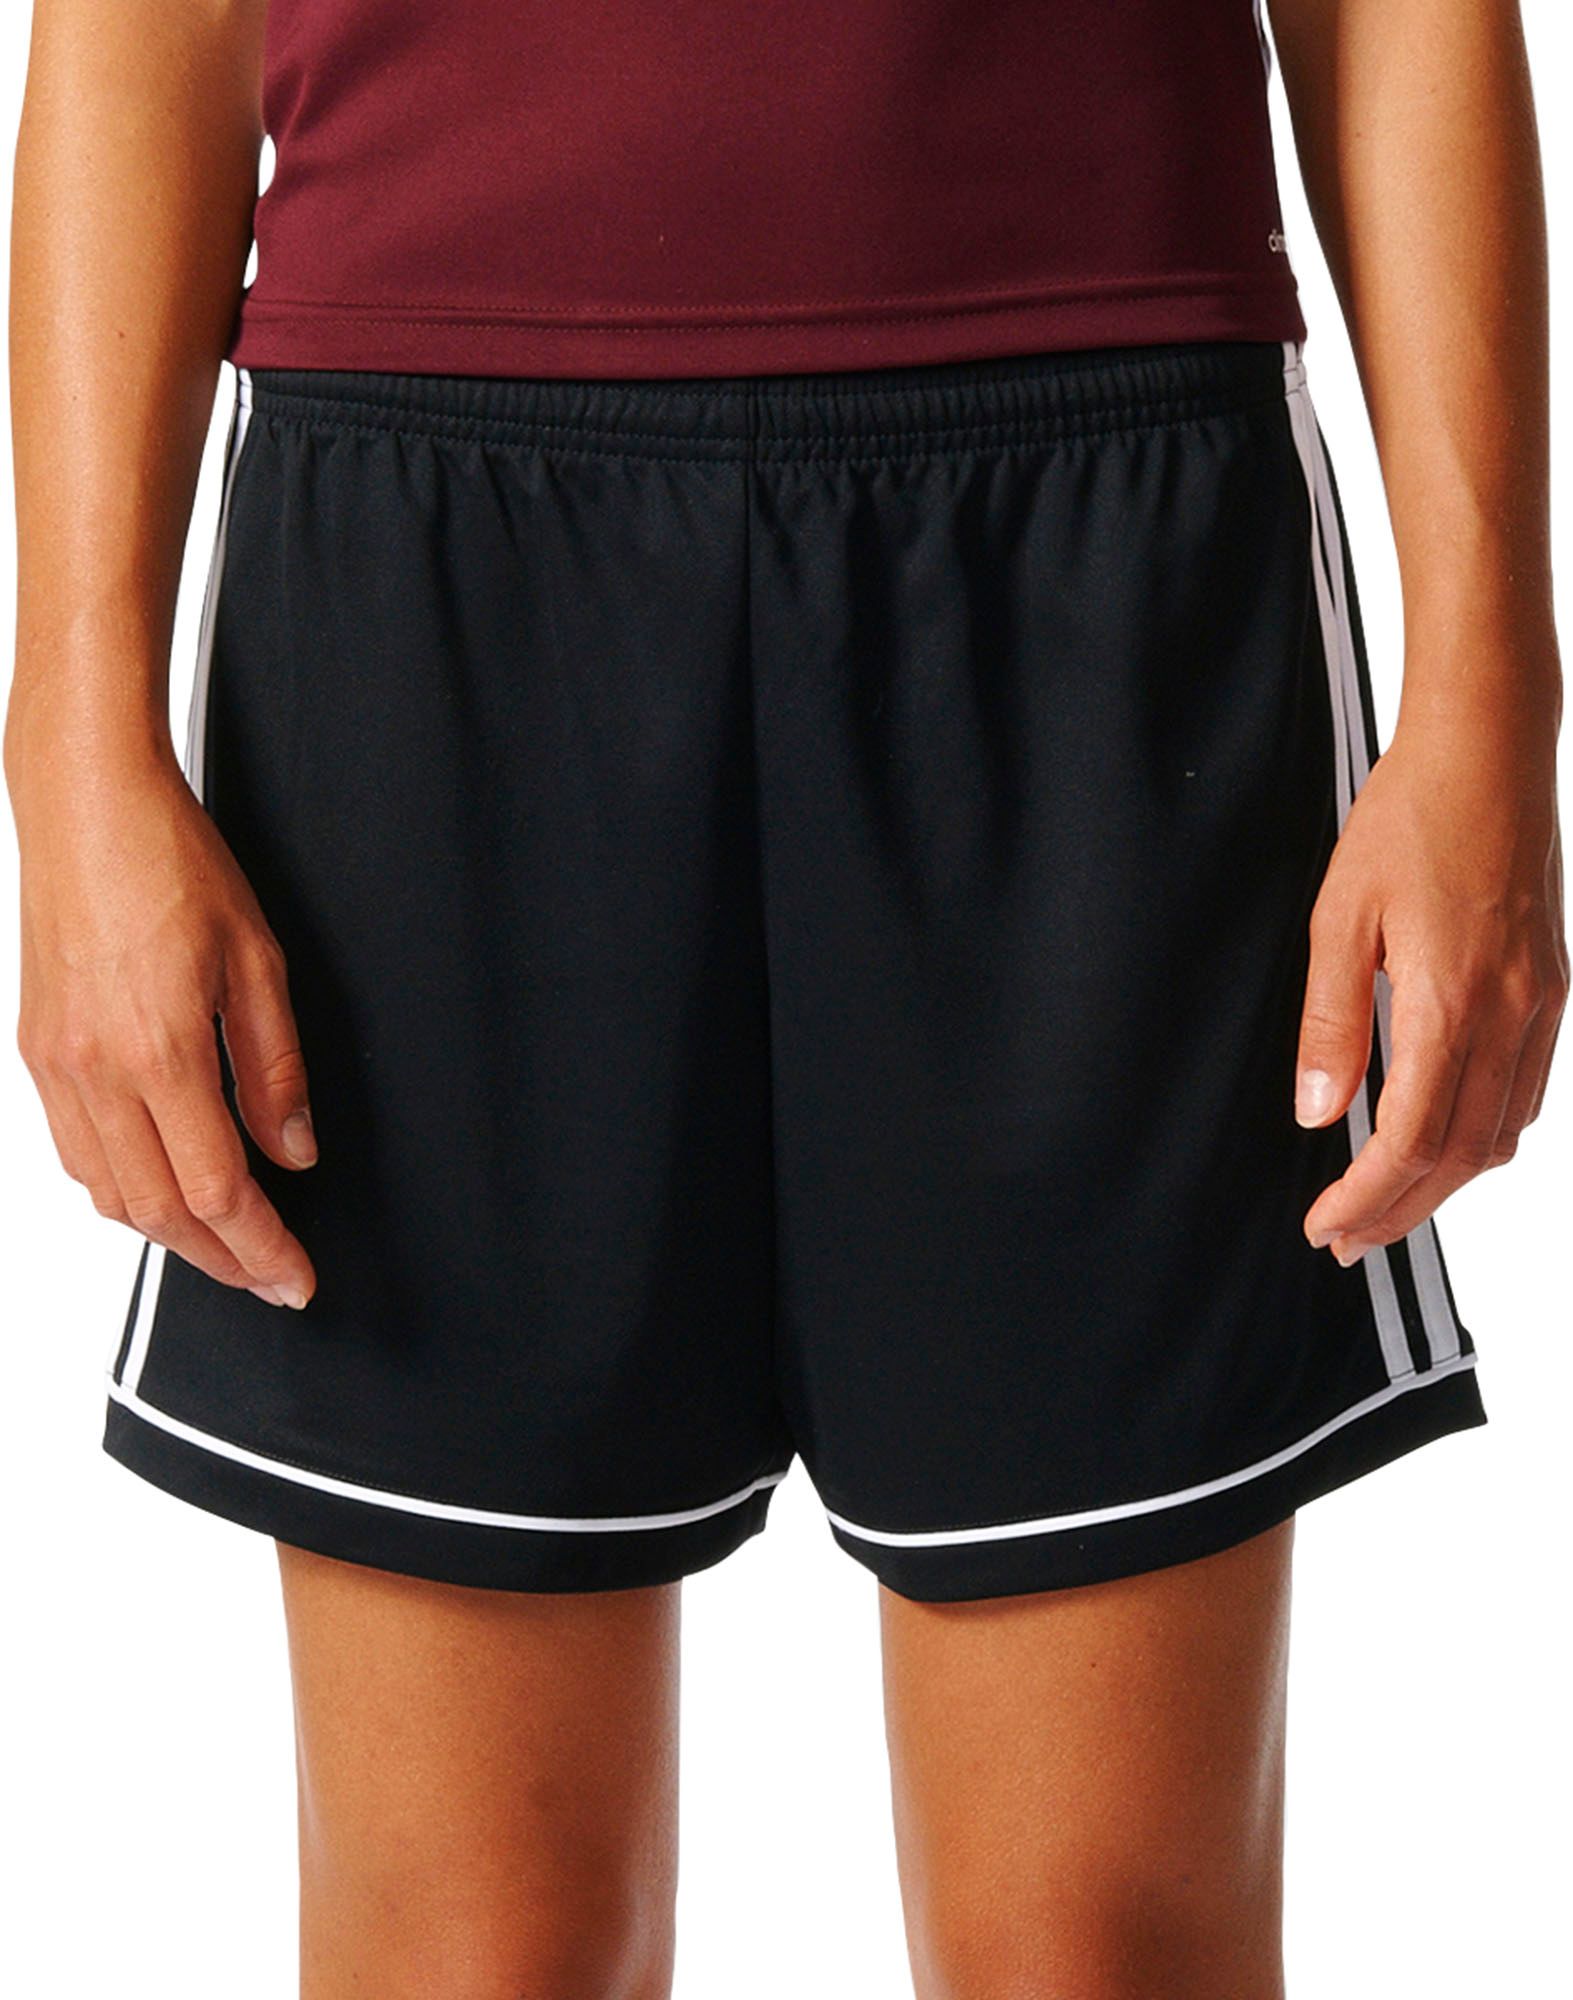 white adidas soccer shorts